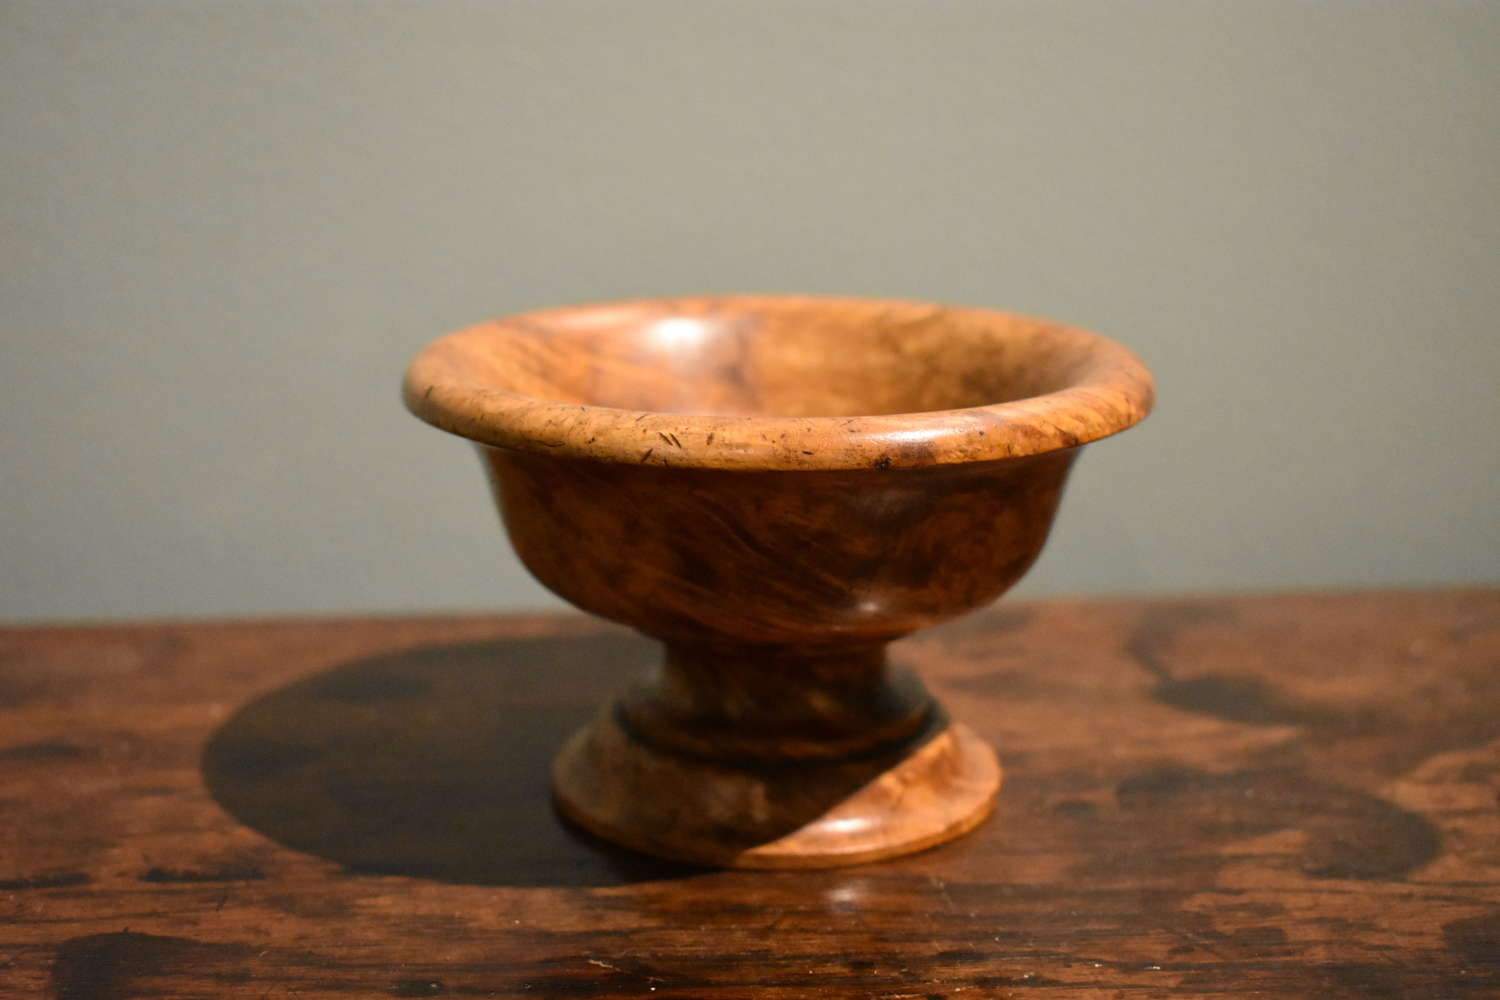 19th century table salt in maple wood